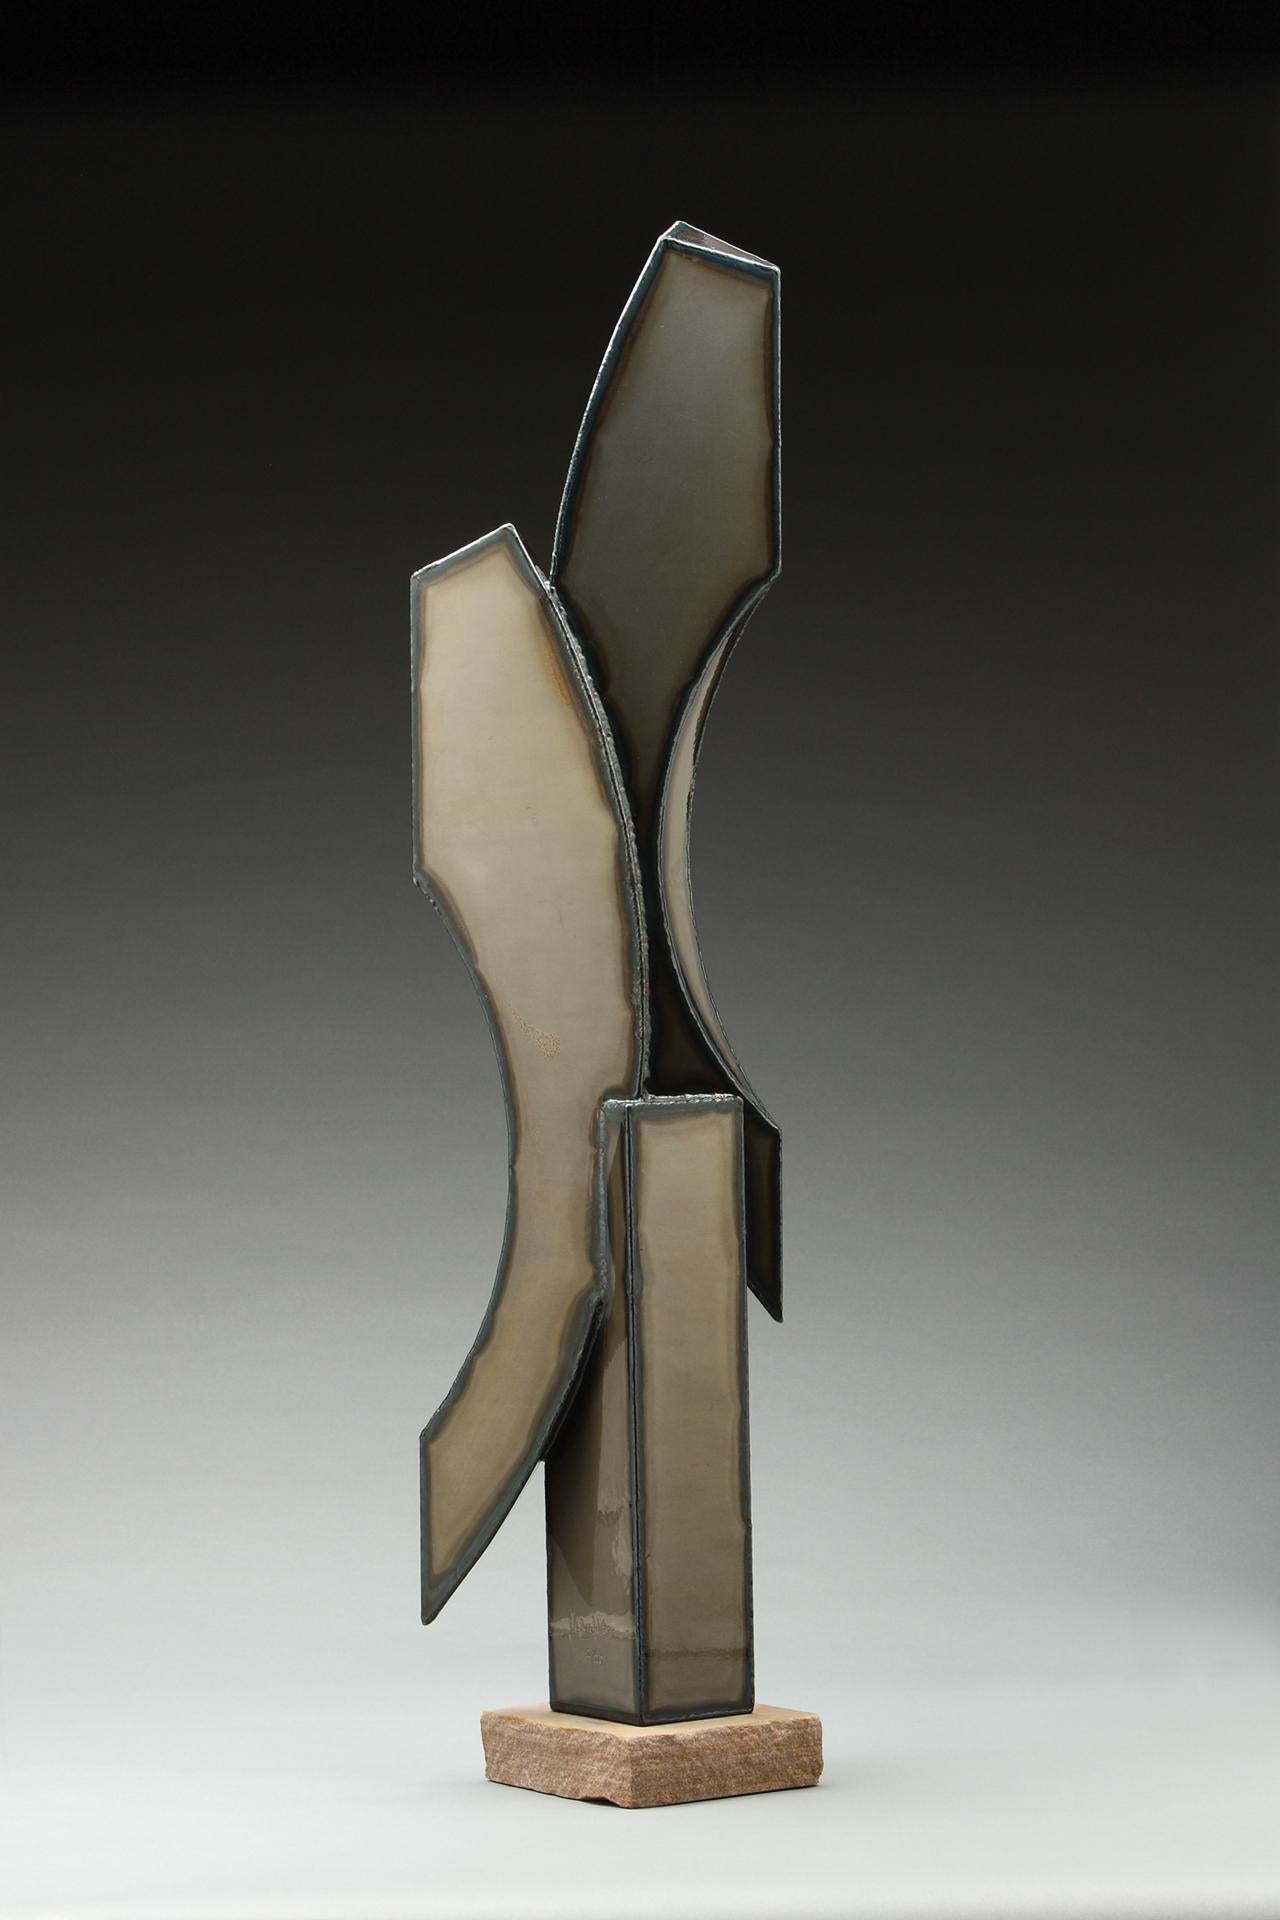 Mark Leichliter Abstract Sculpture - Duet, 30"high powder-coated steel sculpture